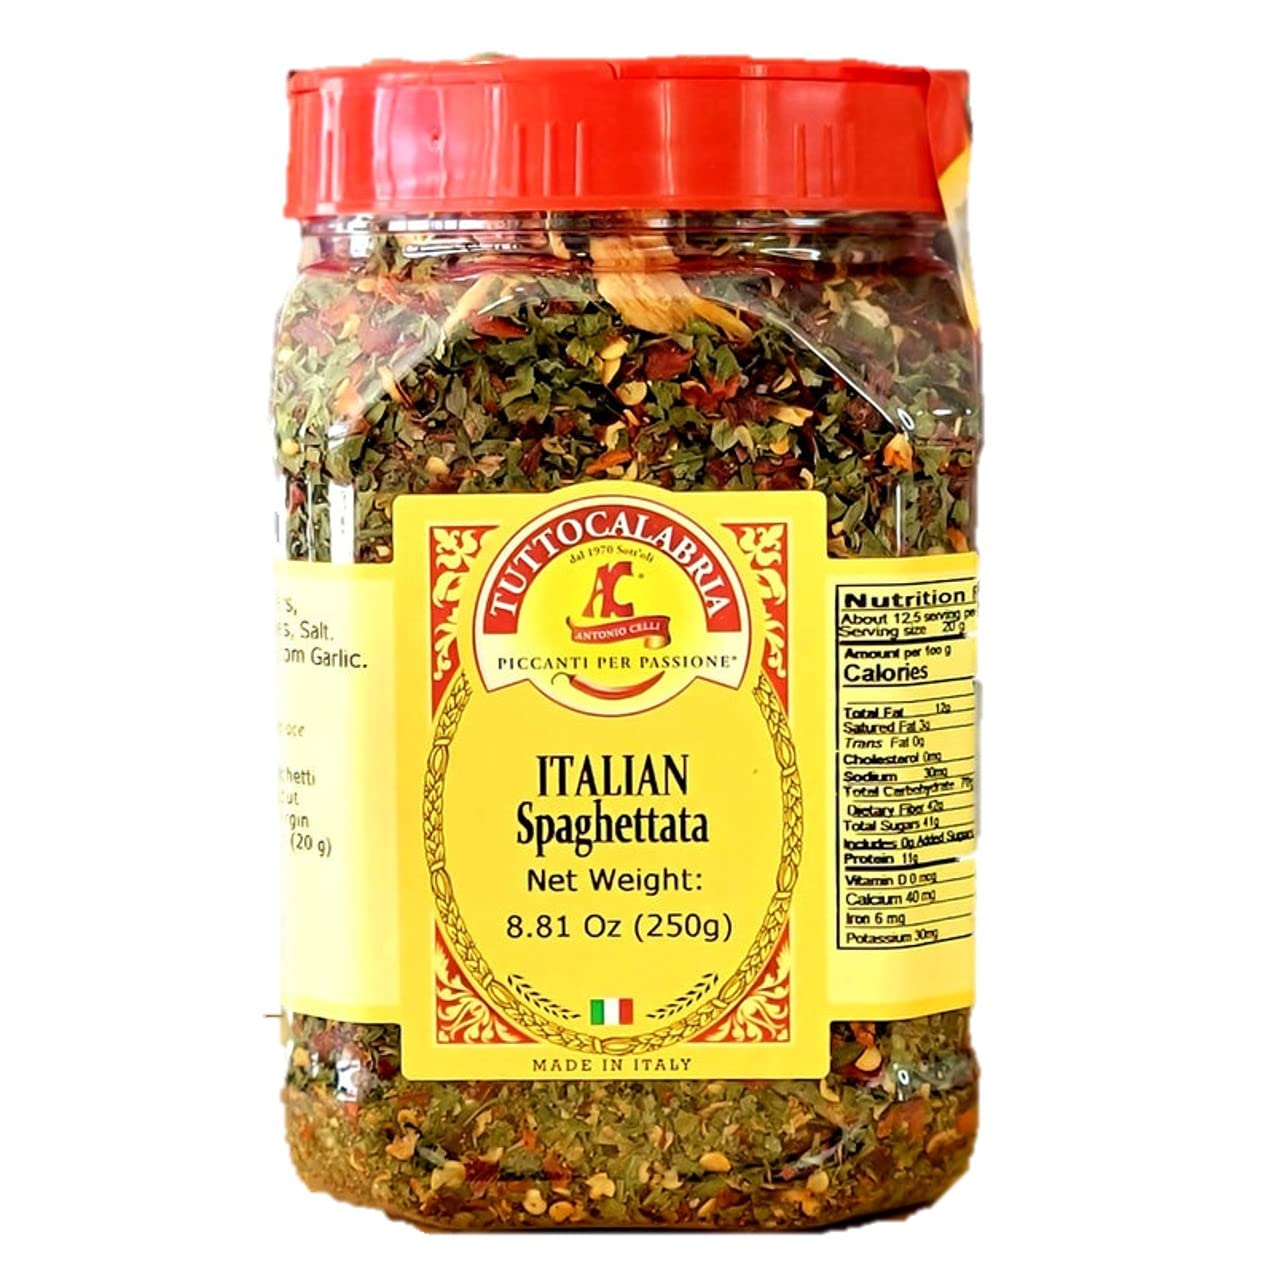 Durkee Spicy Pasta Seasoning (formerly Tone's Italian Spaghetti Seasoning)  - Pantryful